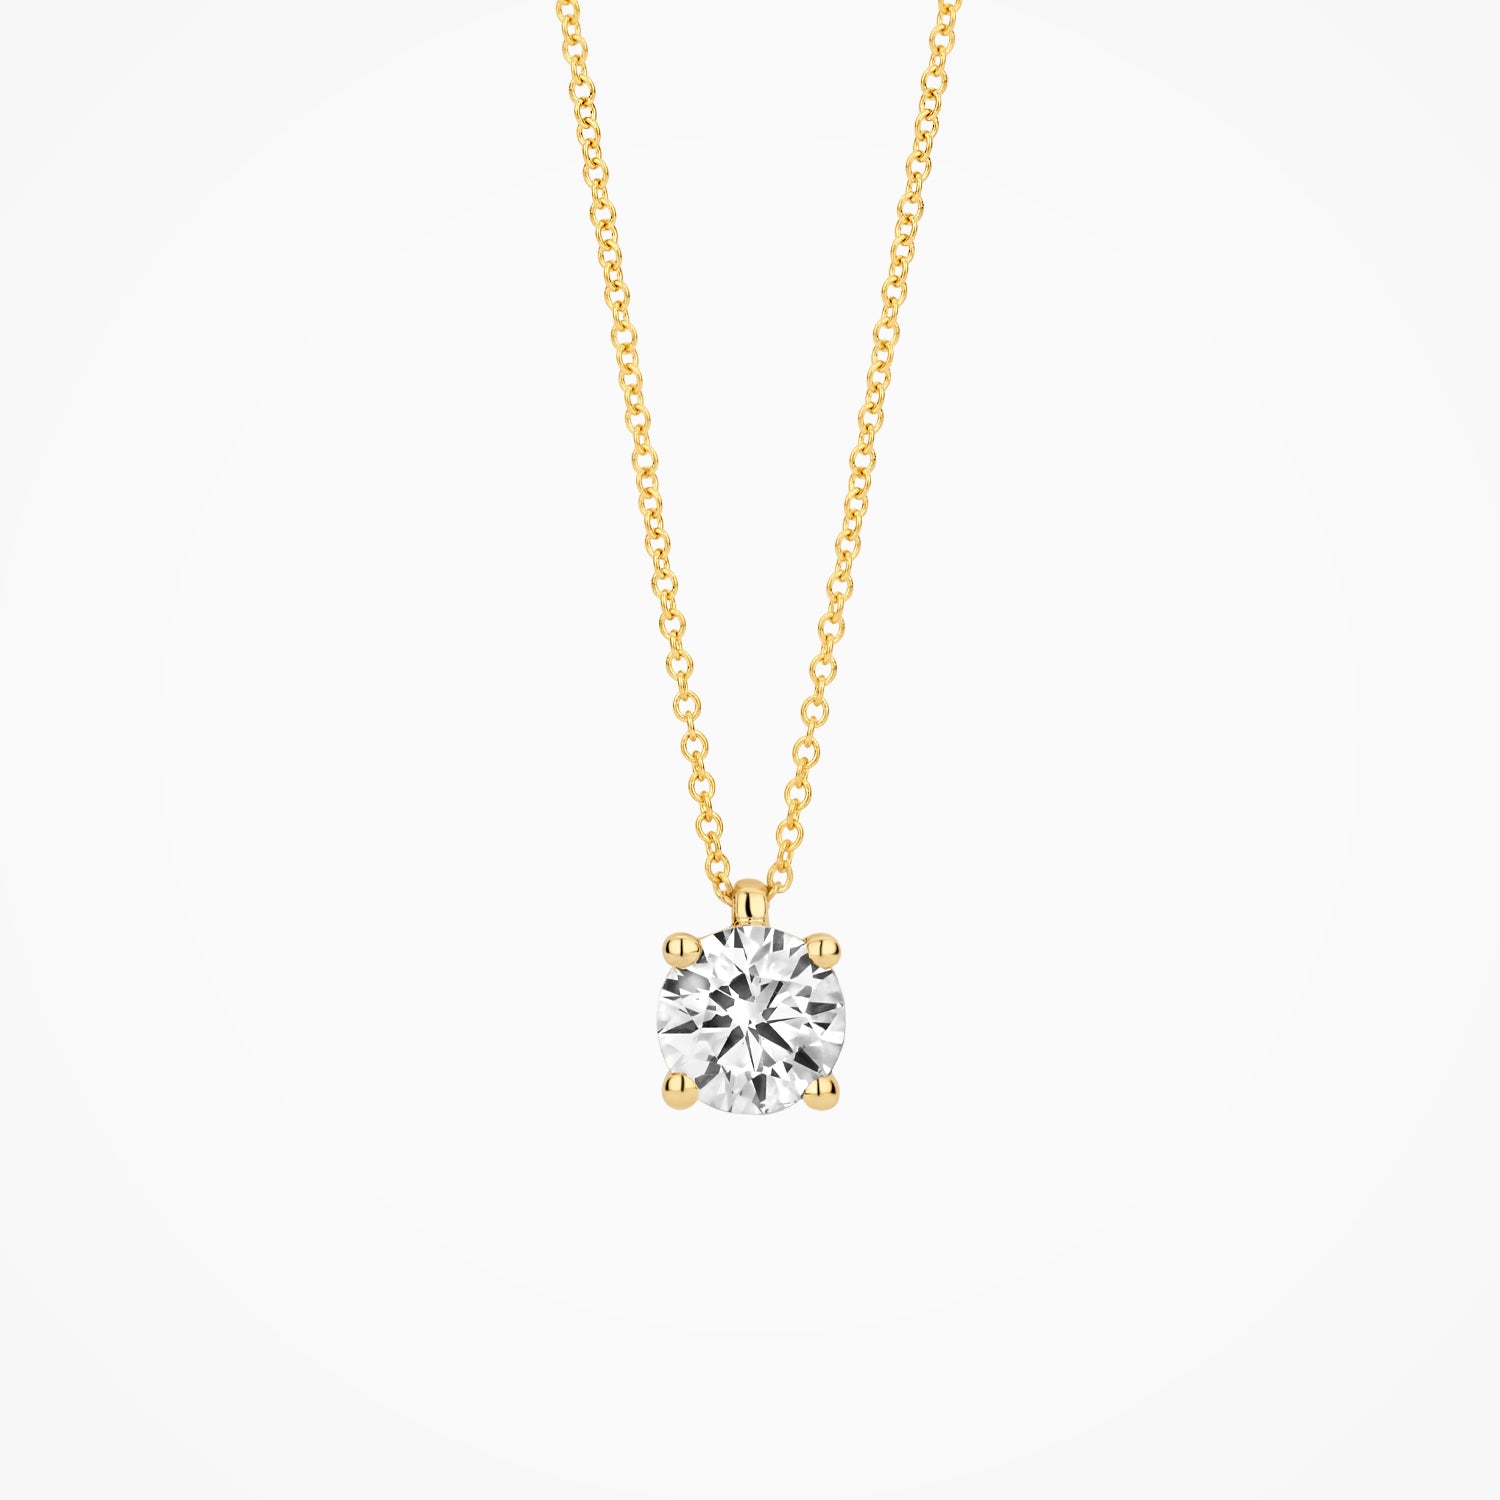 Lab diamonds necklace LG3004Y - 14k Yellow gold